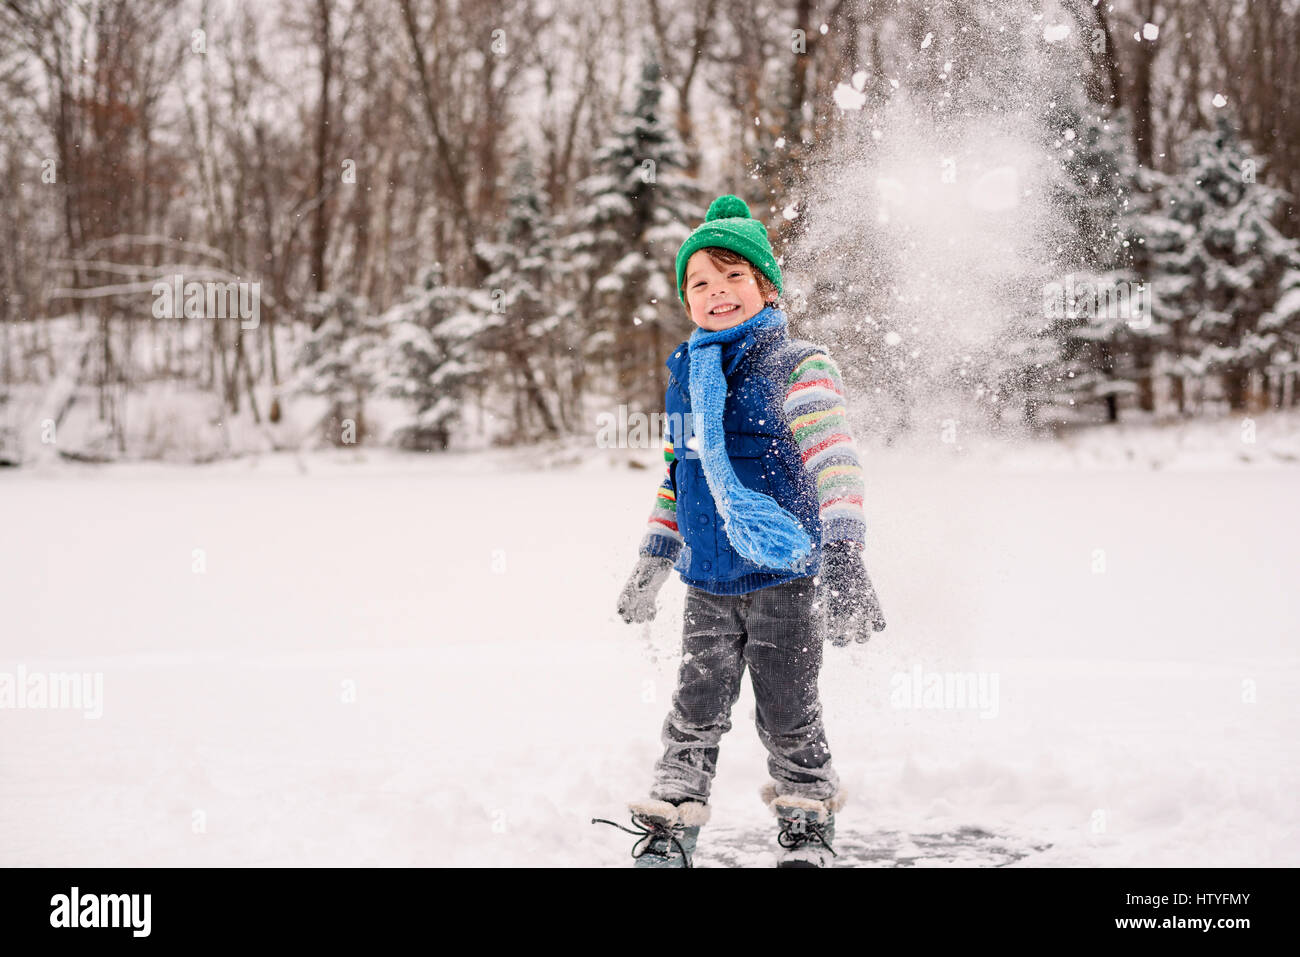 Boy throwing a snowball Stock Photo